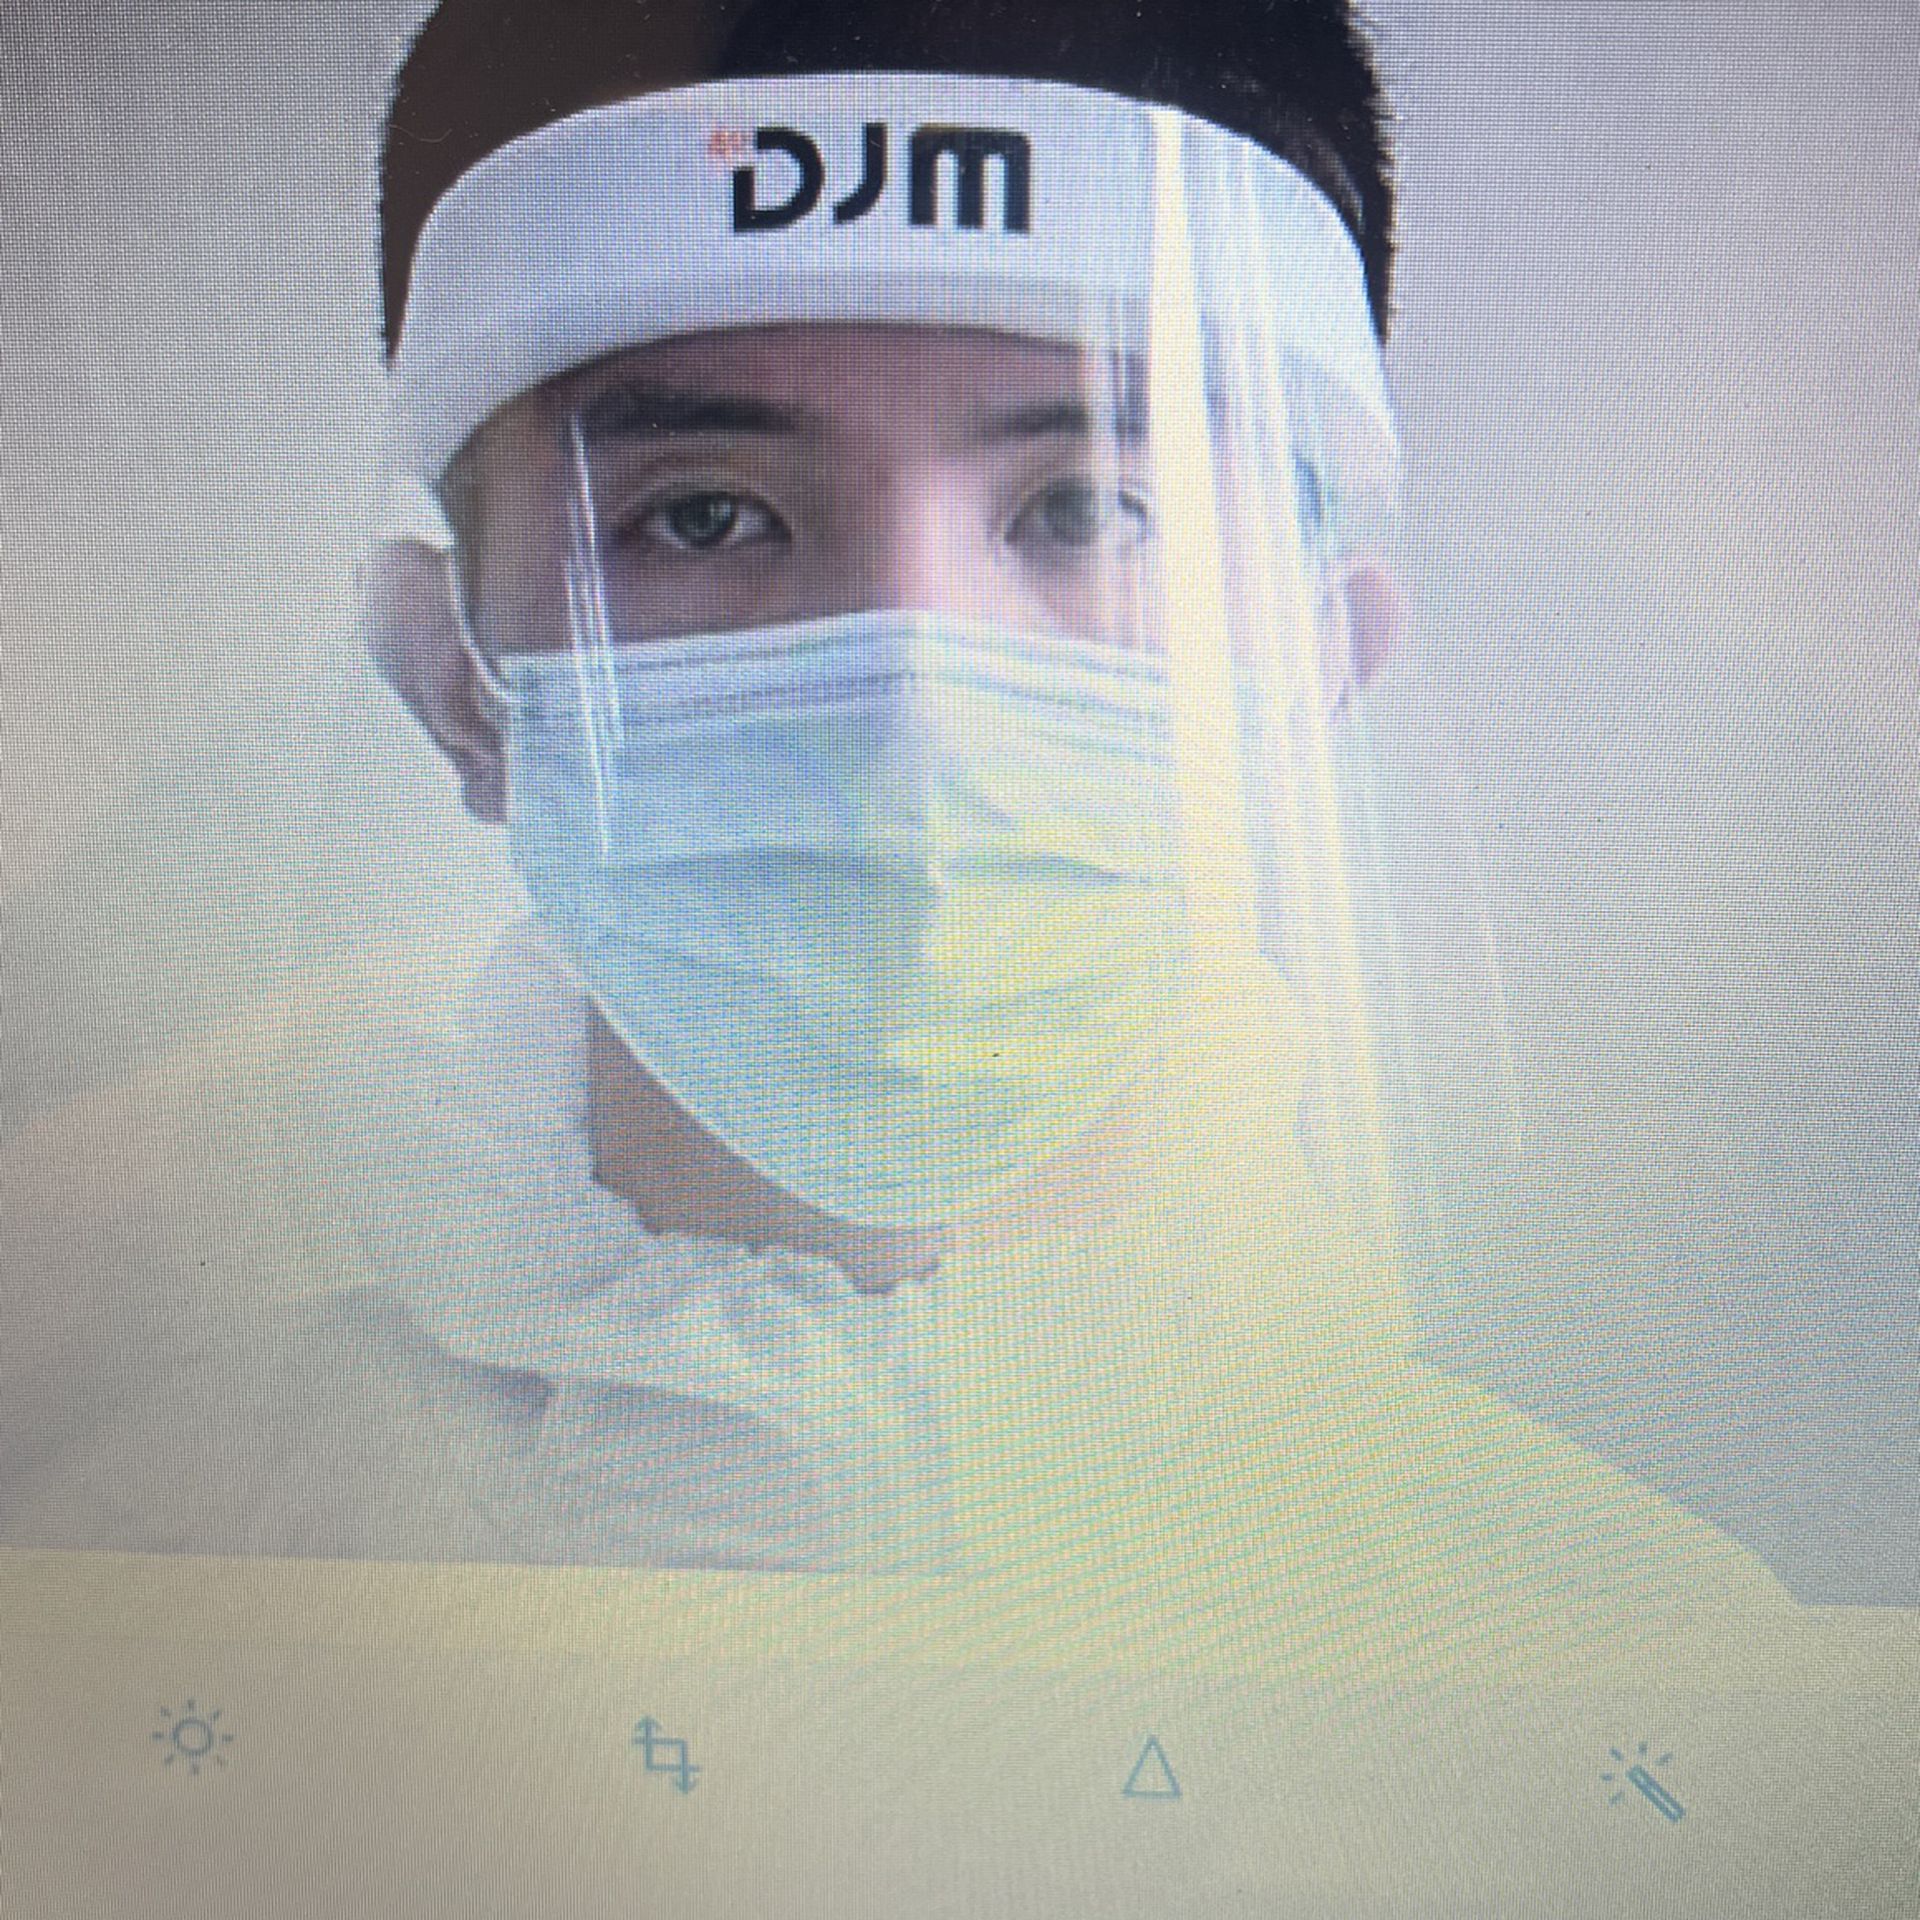 DJM 4.0 200 PCS Medical Face Shield/Isolation Face Mask Lot Germ Protection Reseller 